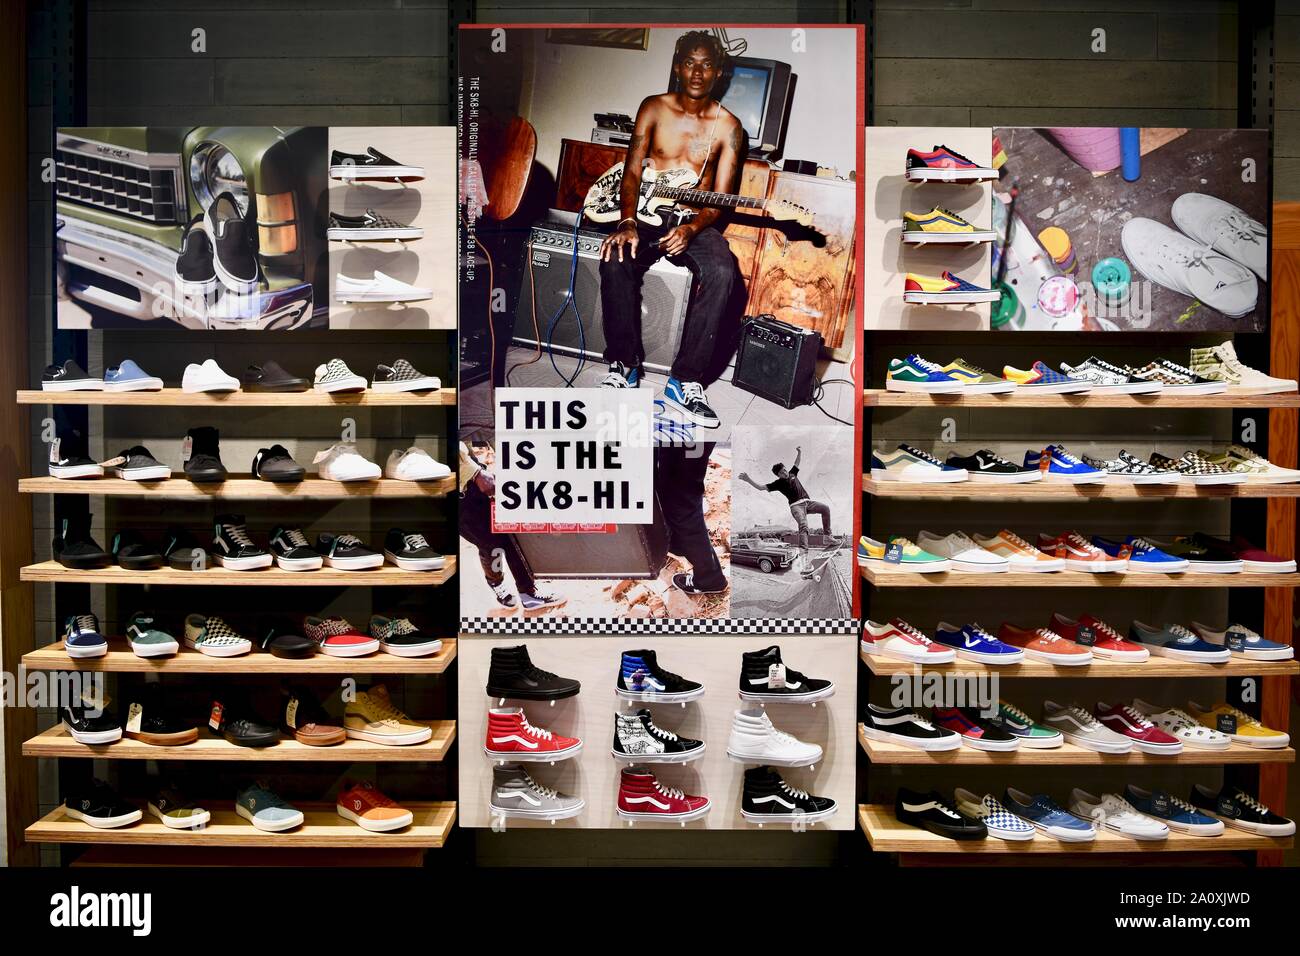 Vans Schuhe Vans store, NEW YORK CITY, USA Stockfotografie - Alamy